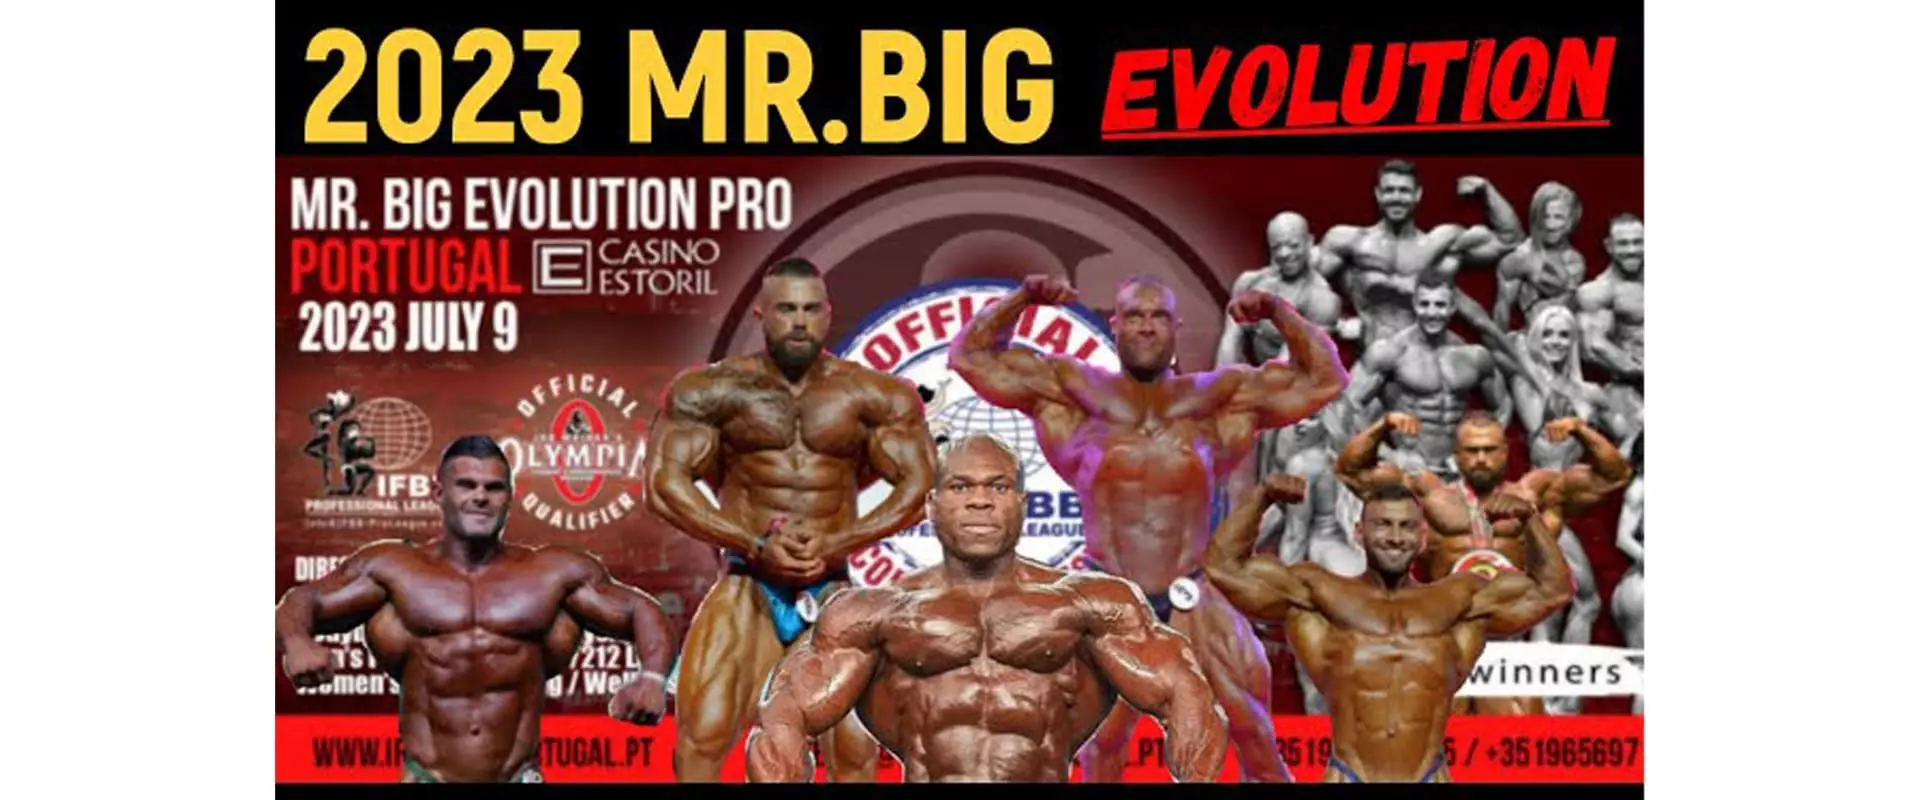 Mr. Big Evolution Pro Bodybuilding